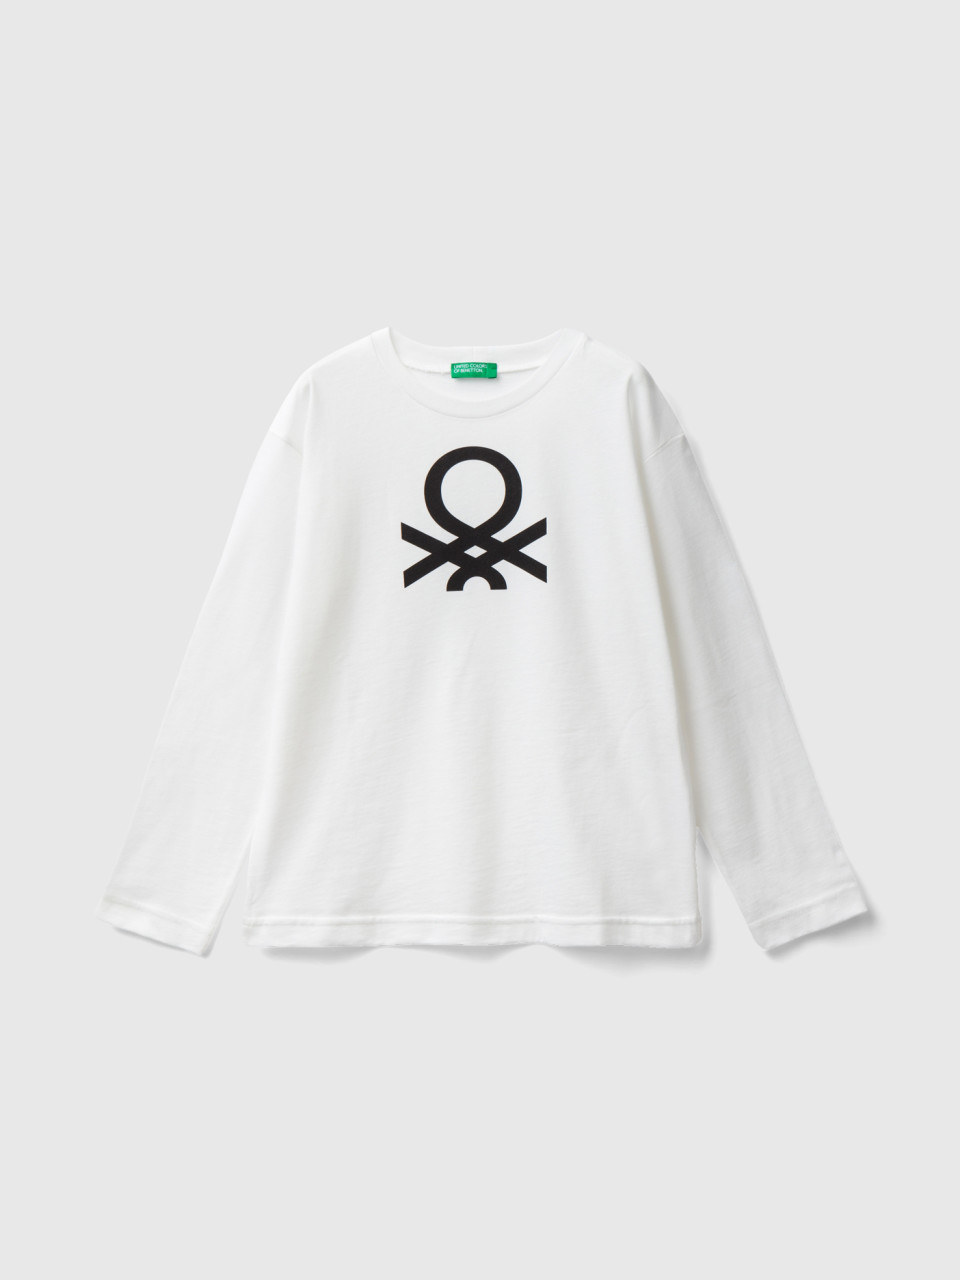 Benetton, Long Sleeve T-shirt With Logo, Creamy White, Kids